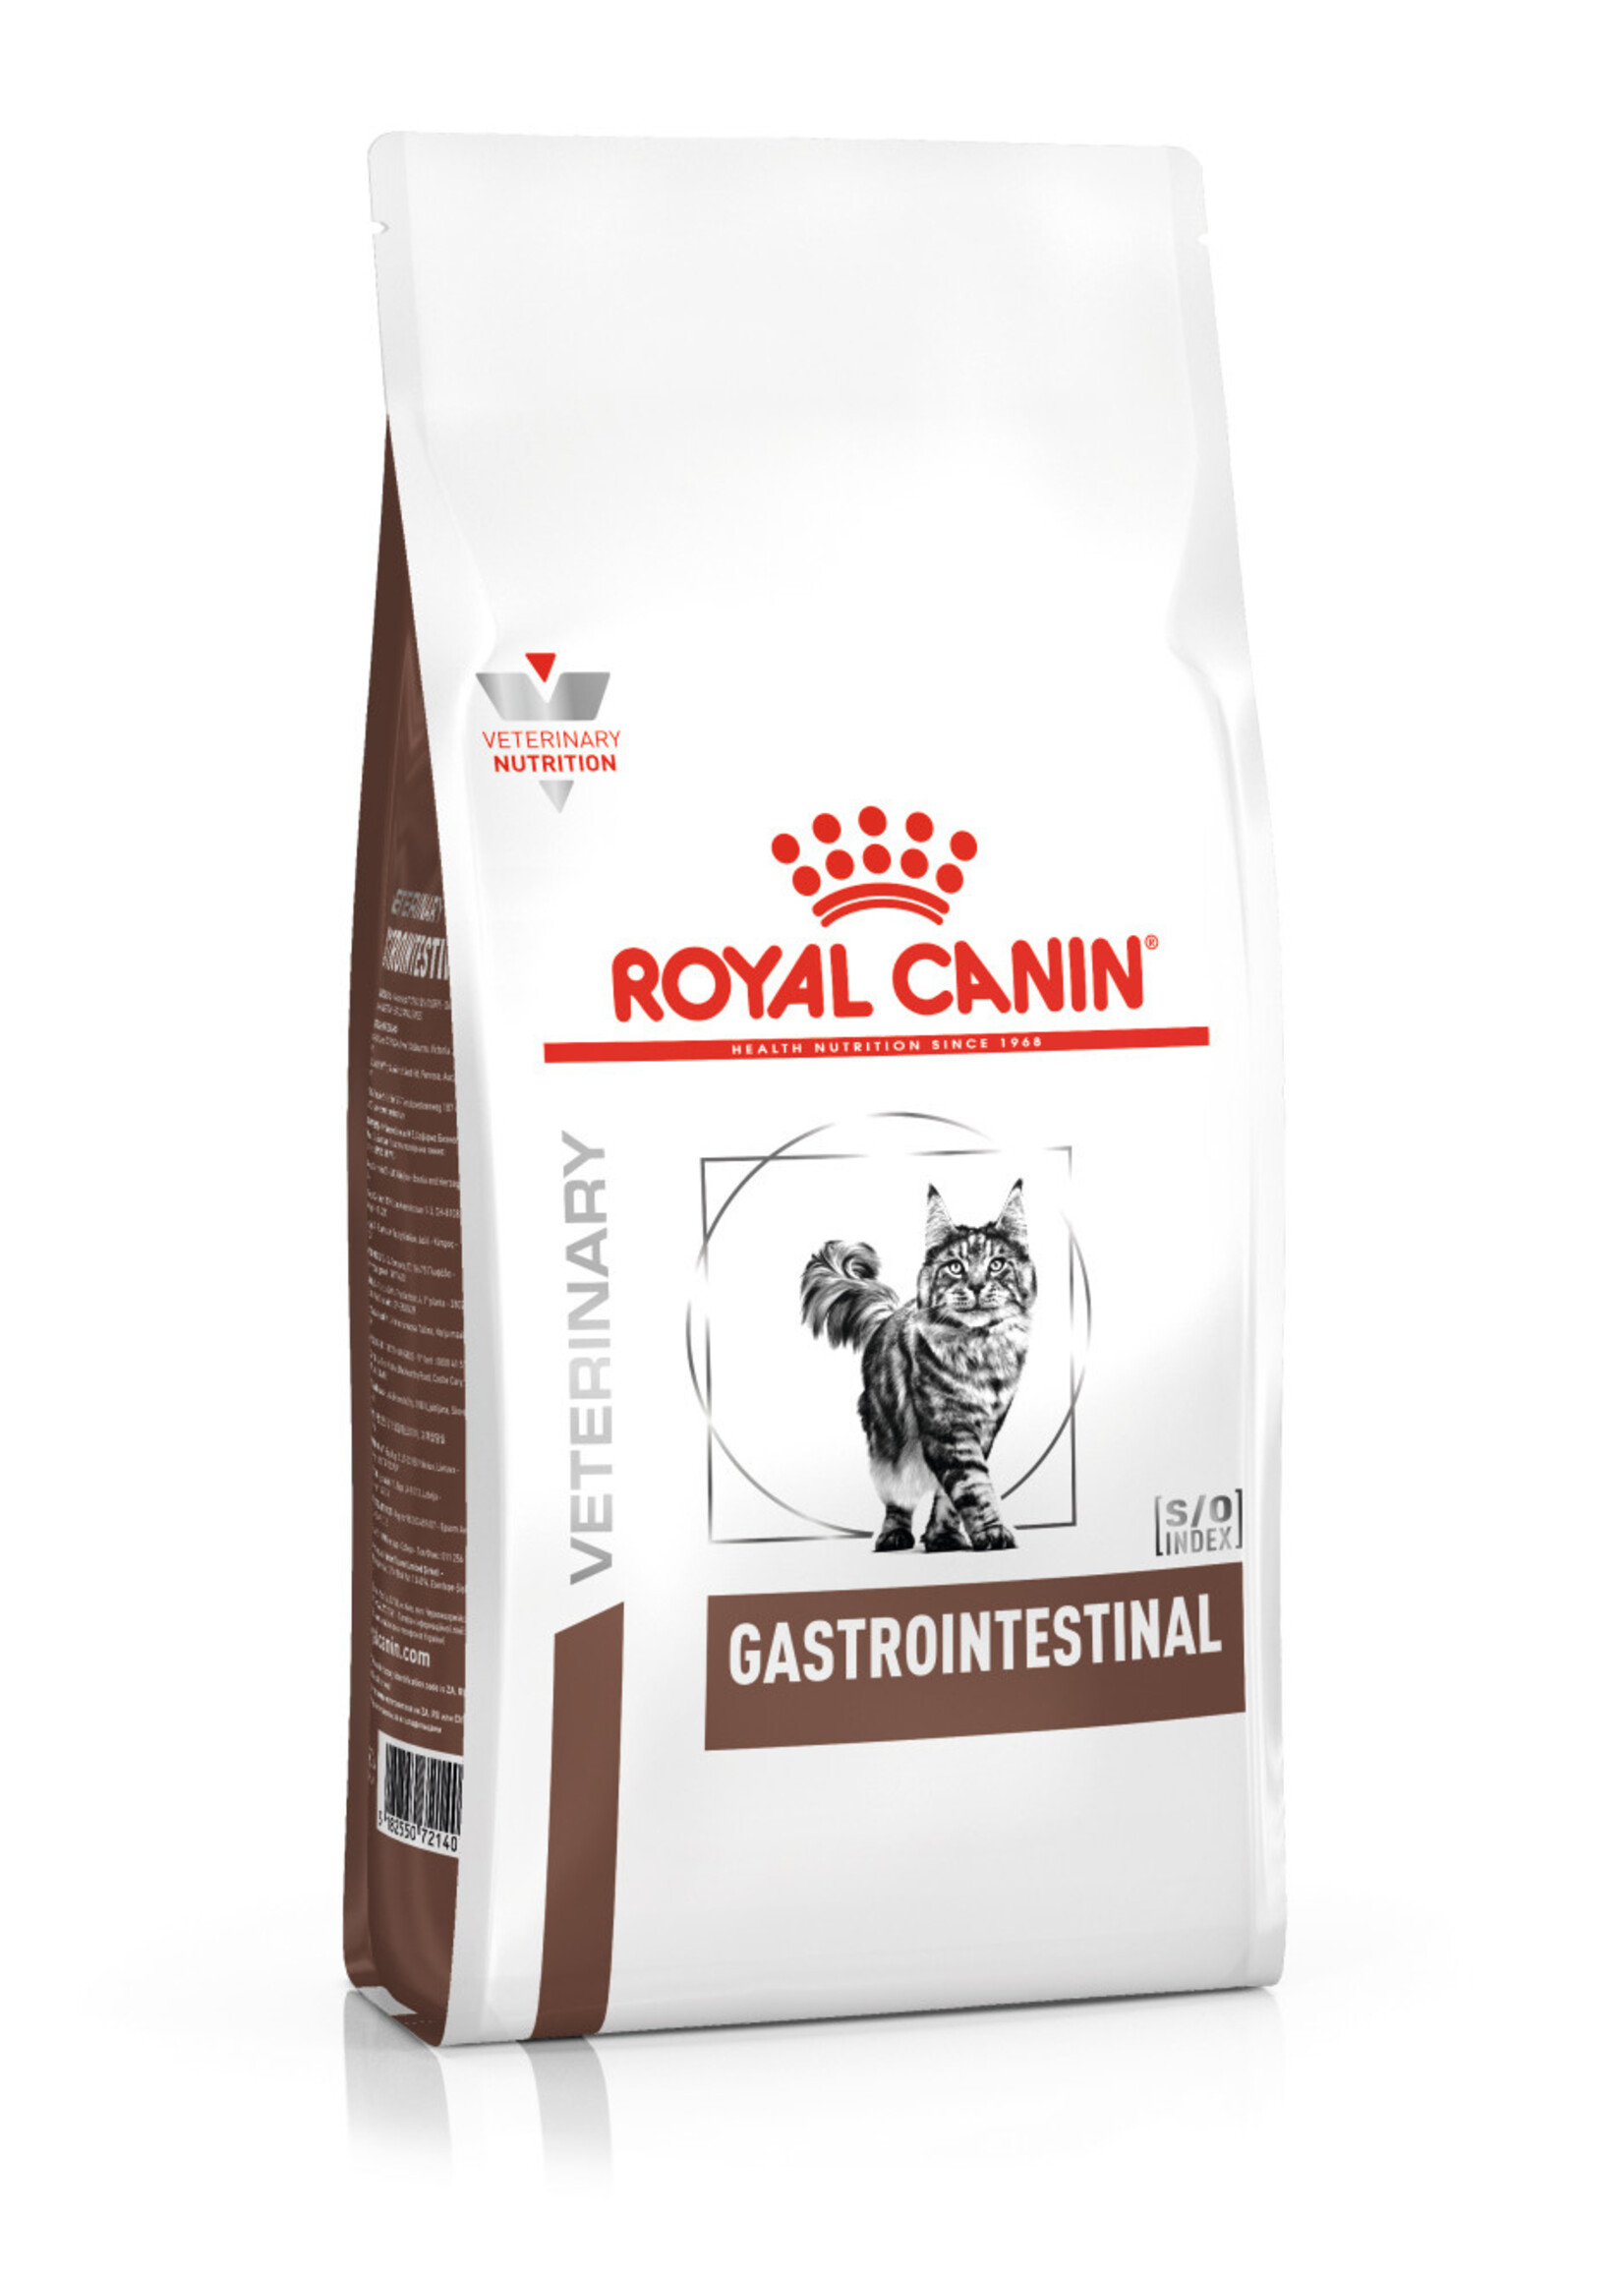 Royal Canin Royal Canin Gastro Intestinal Katze 4kg